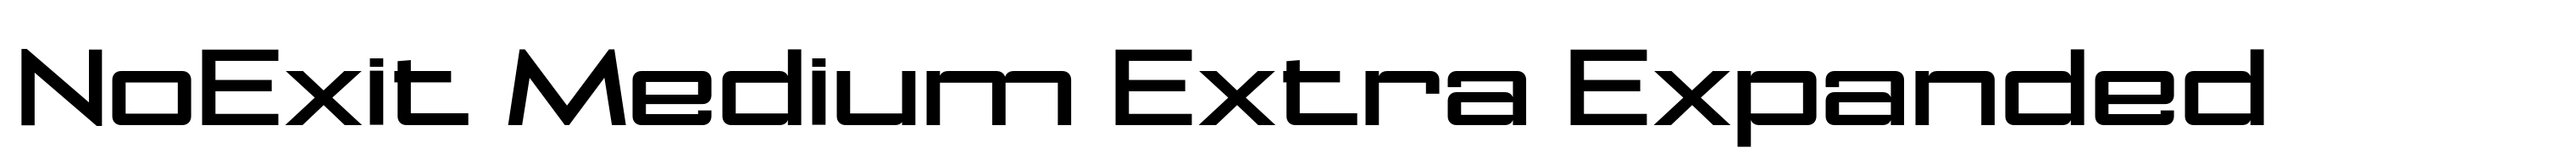 NoExit Medium Extra Expanded